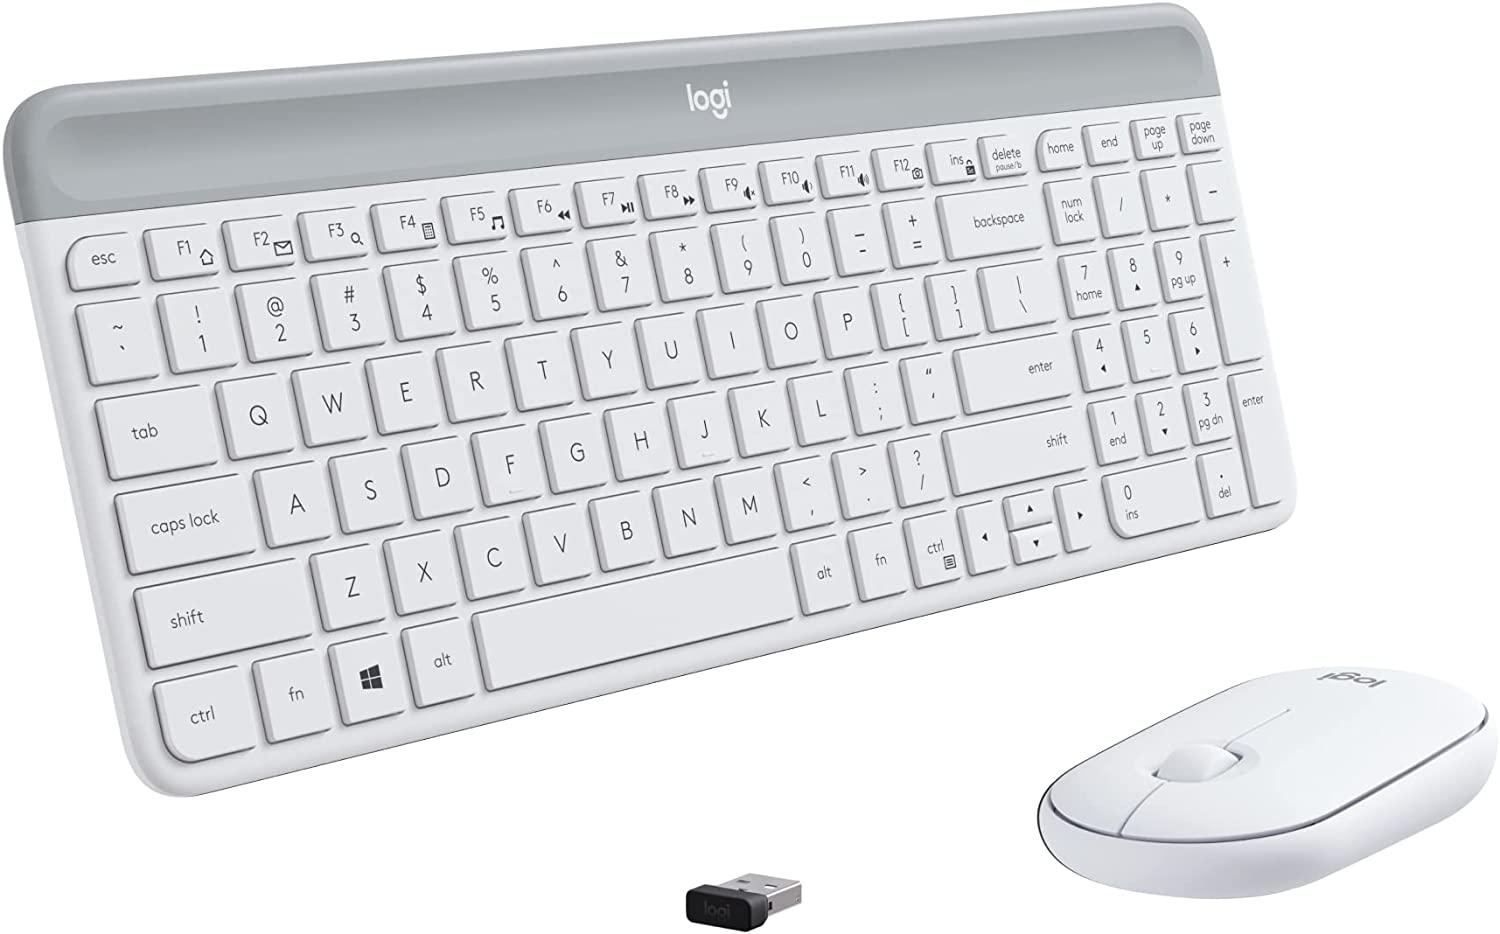 Logitech MK470 Slim Wireless Keyboard & Mouse Combo for $29.99 Shipped